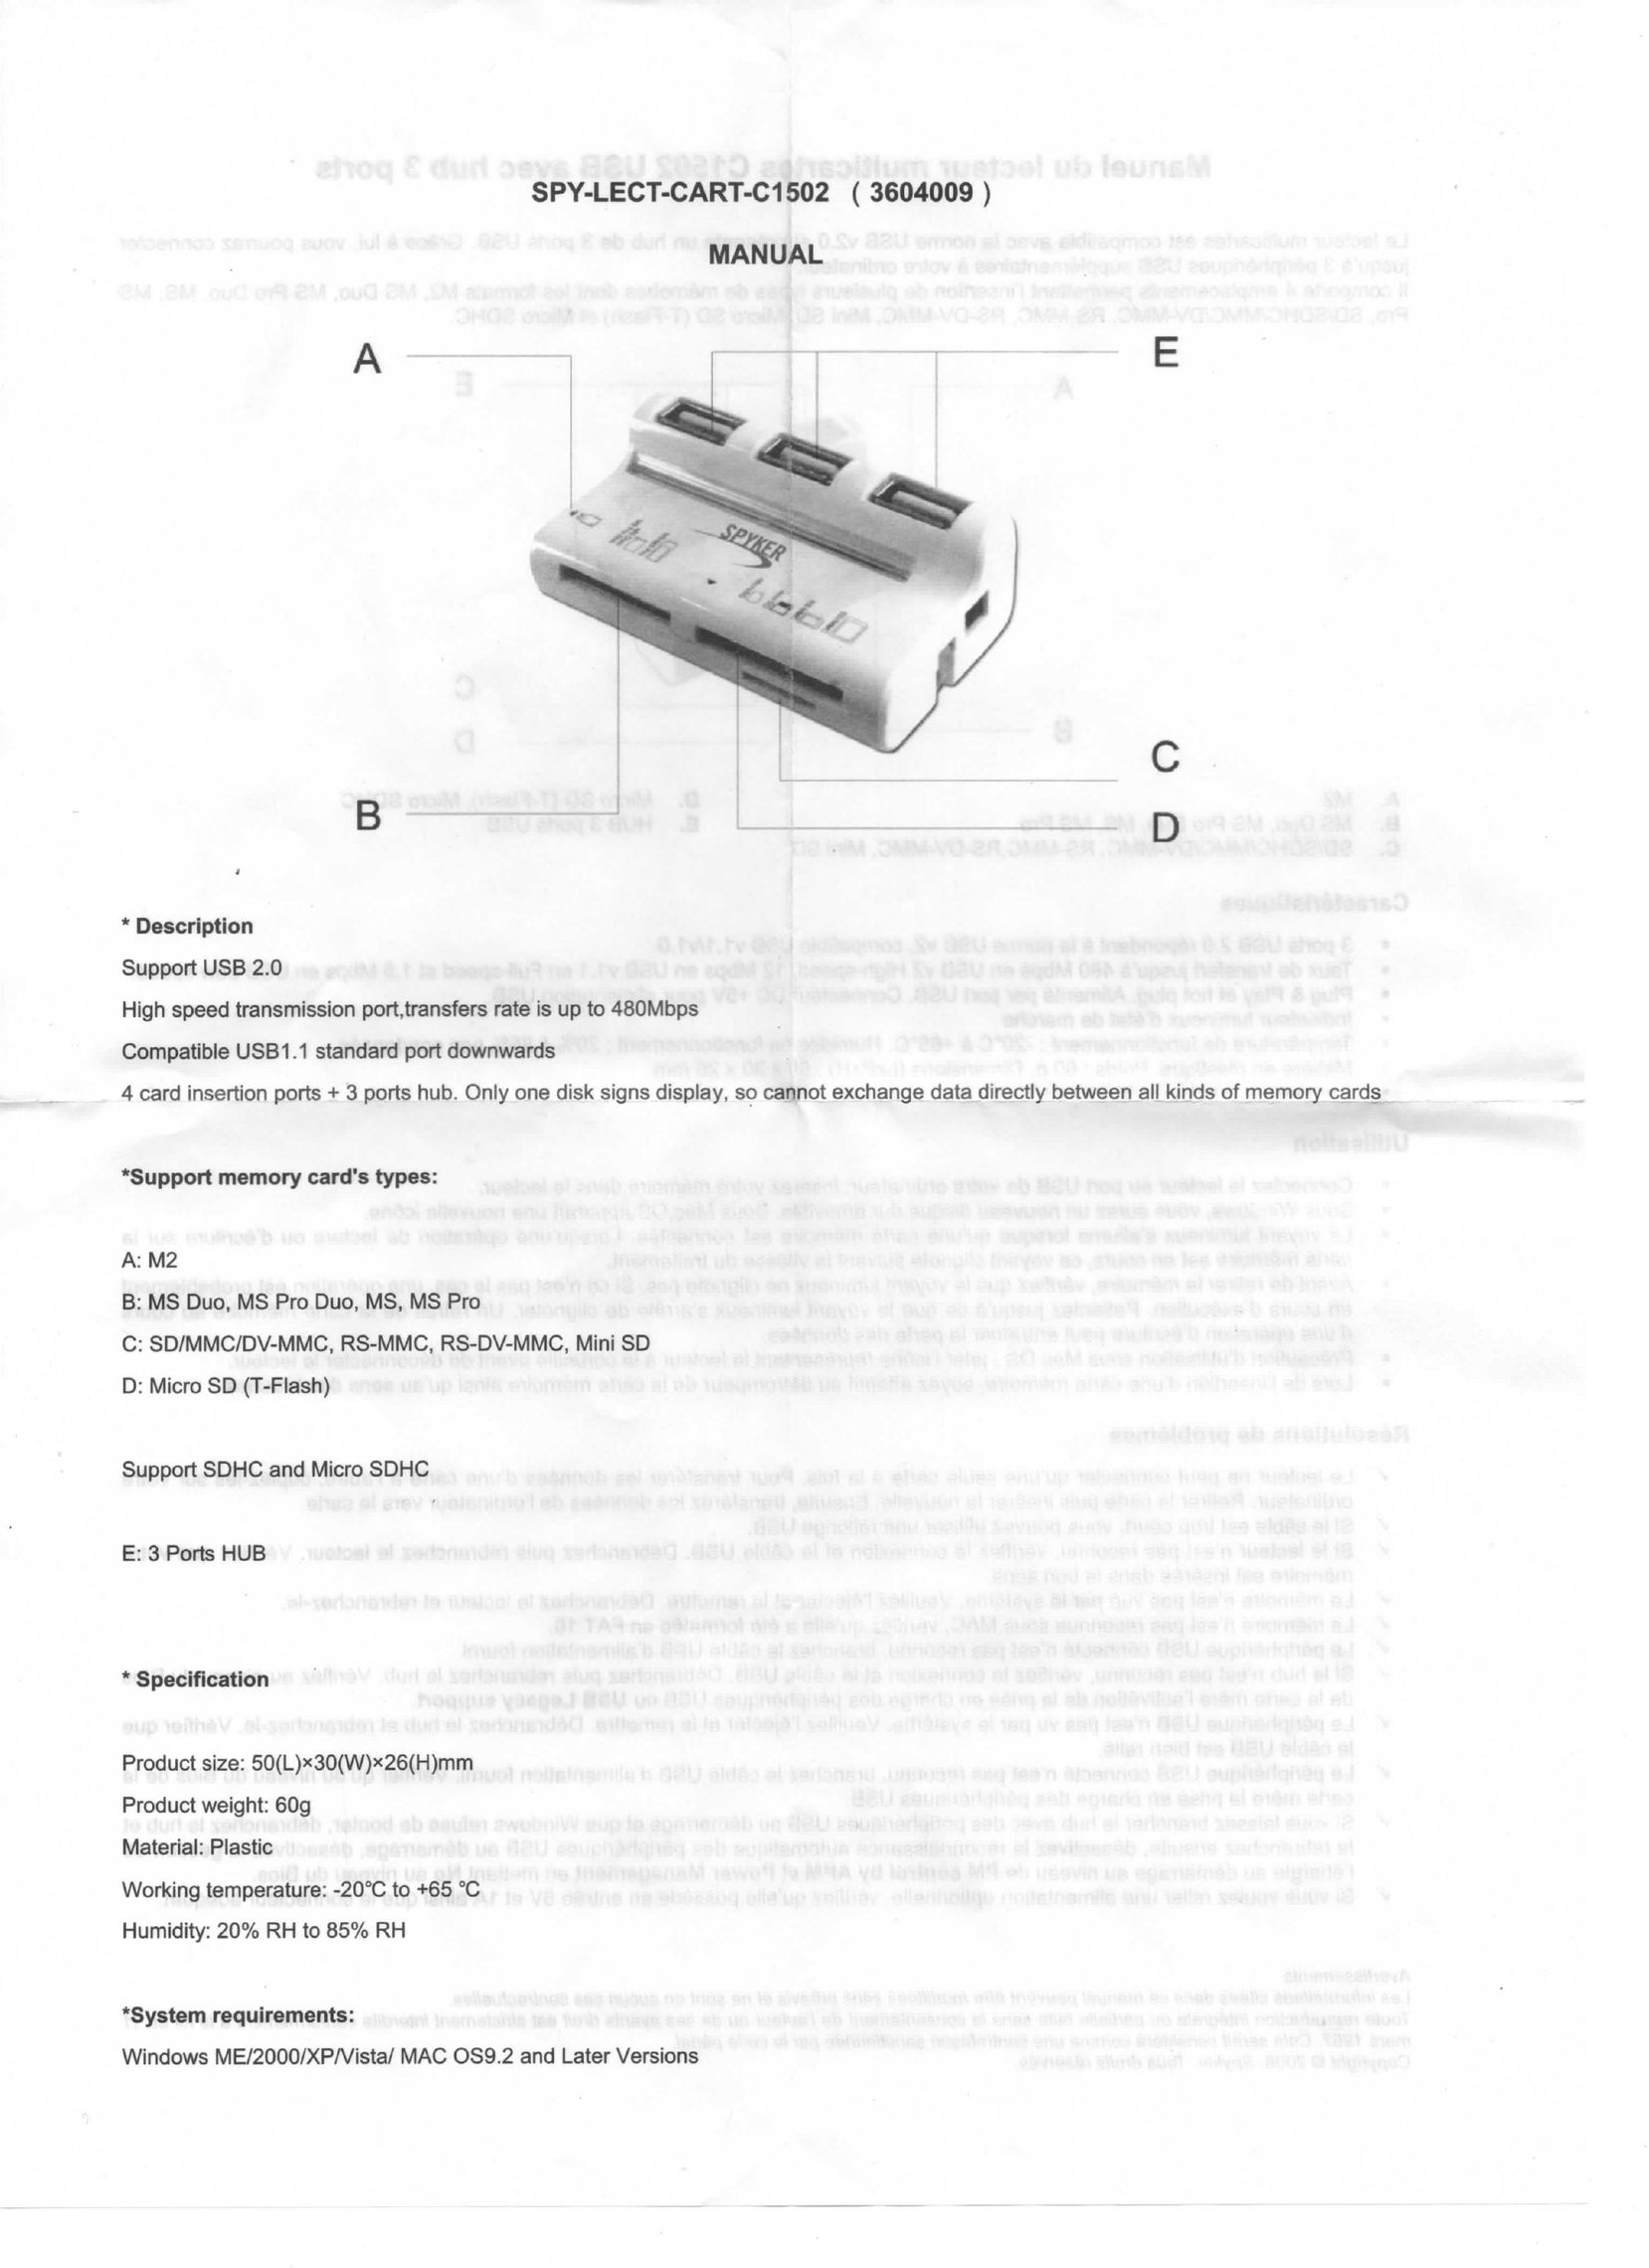 Syba Tech CLCRD50007 Computer Accessories User Manual